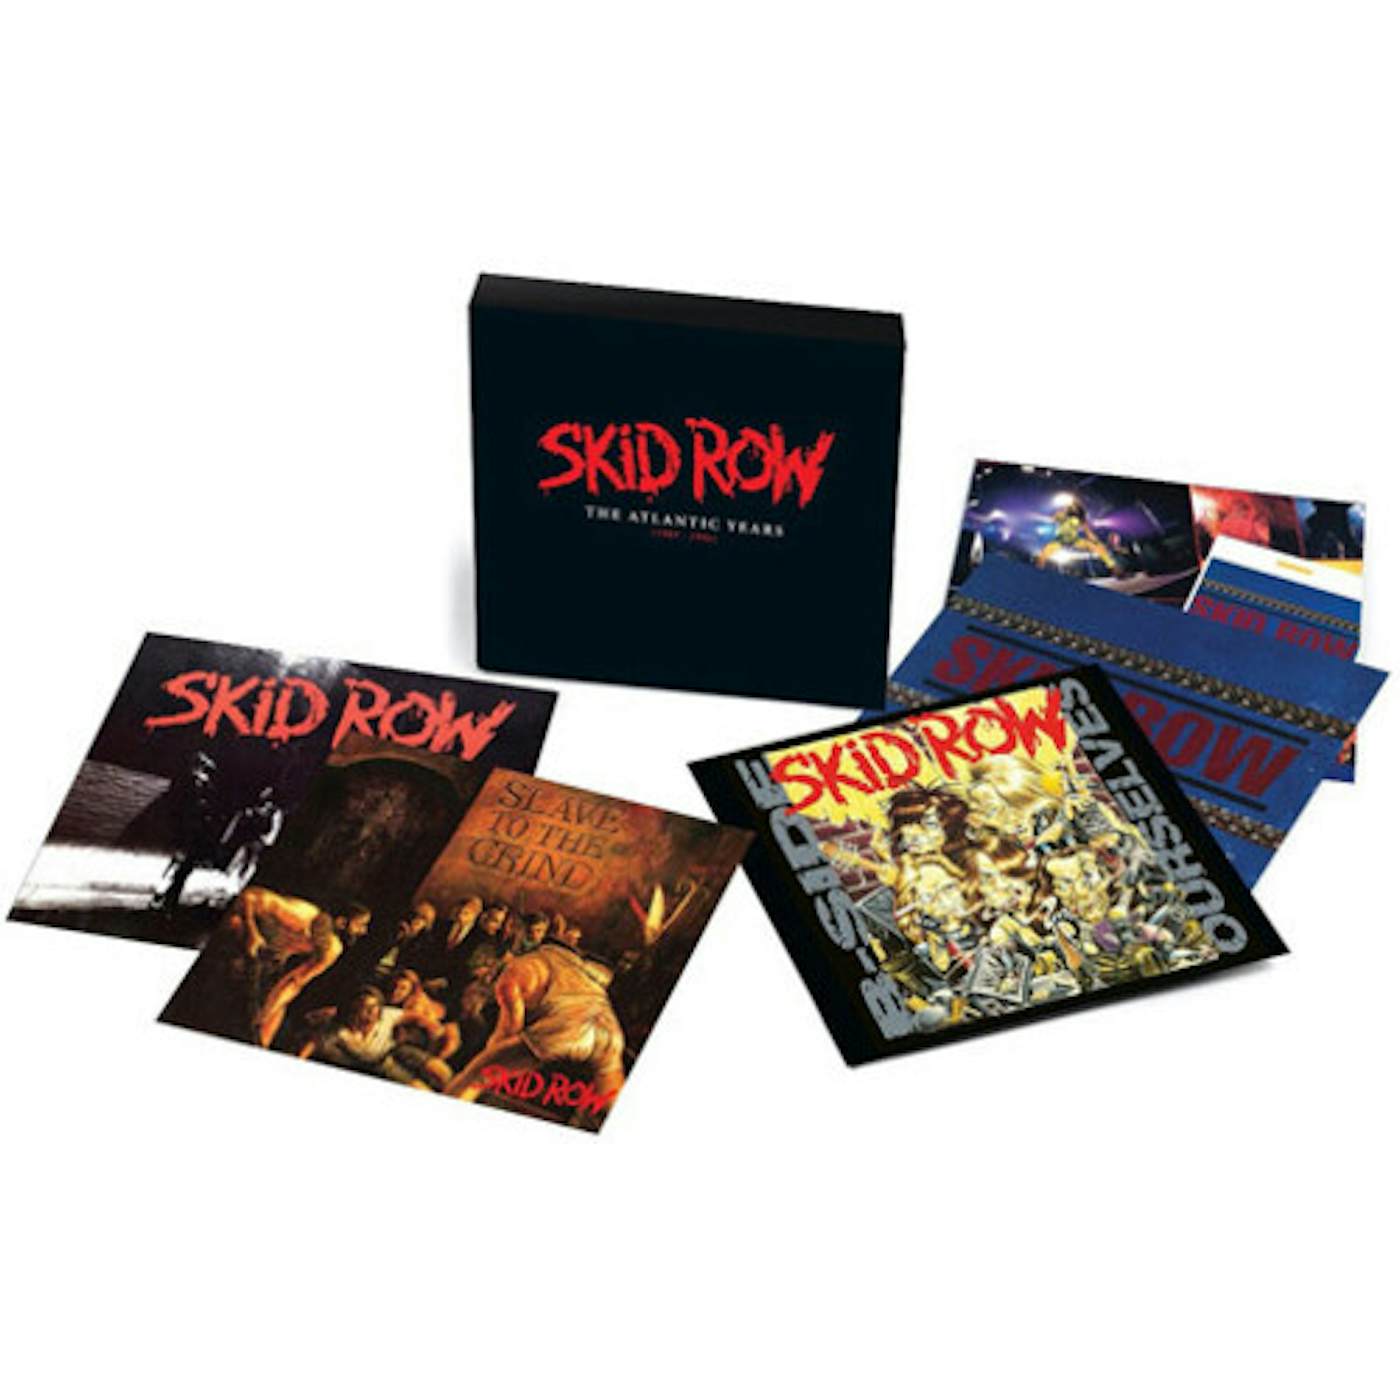 Skid Row ATLANTIC YEARS (1989 - 1996) CD